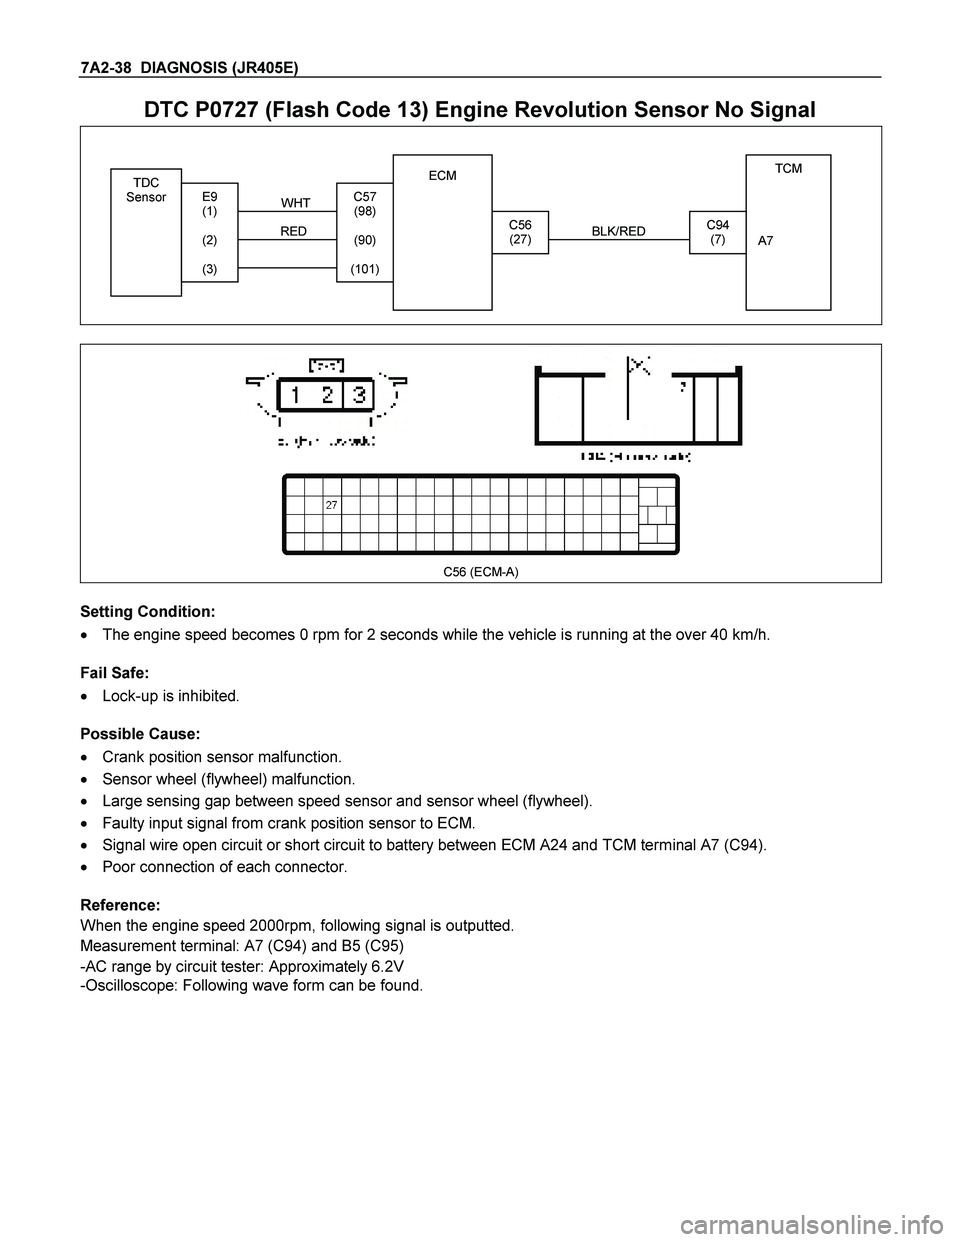 ISUZU TF SERIES 2004  Workshop Manual 7A2-38  DIAGNOSIS (JR405E)  
DTC P0727 (Flash Code 13) Engine Revolution Sensor No Signal  
  
 
 
 RED 
TDC  
Sensor TCM    
 
  
 
A7 
C94  (7)  
 BLK/RED
 WHT 
C56 
(27)
E9 
(1)  
 
(2)     
(3)
 
